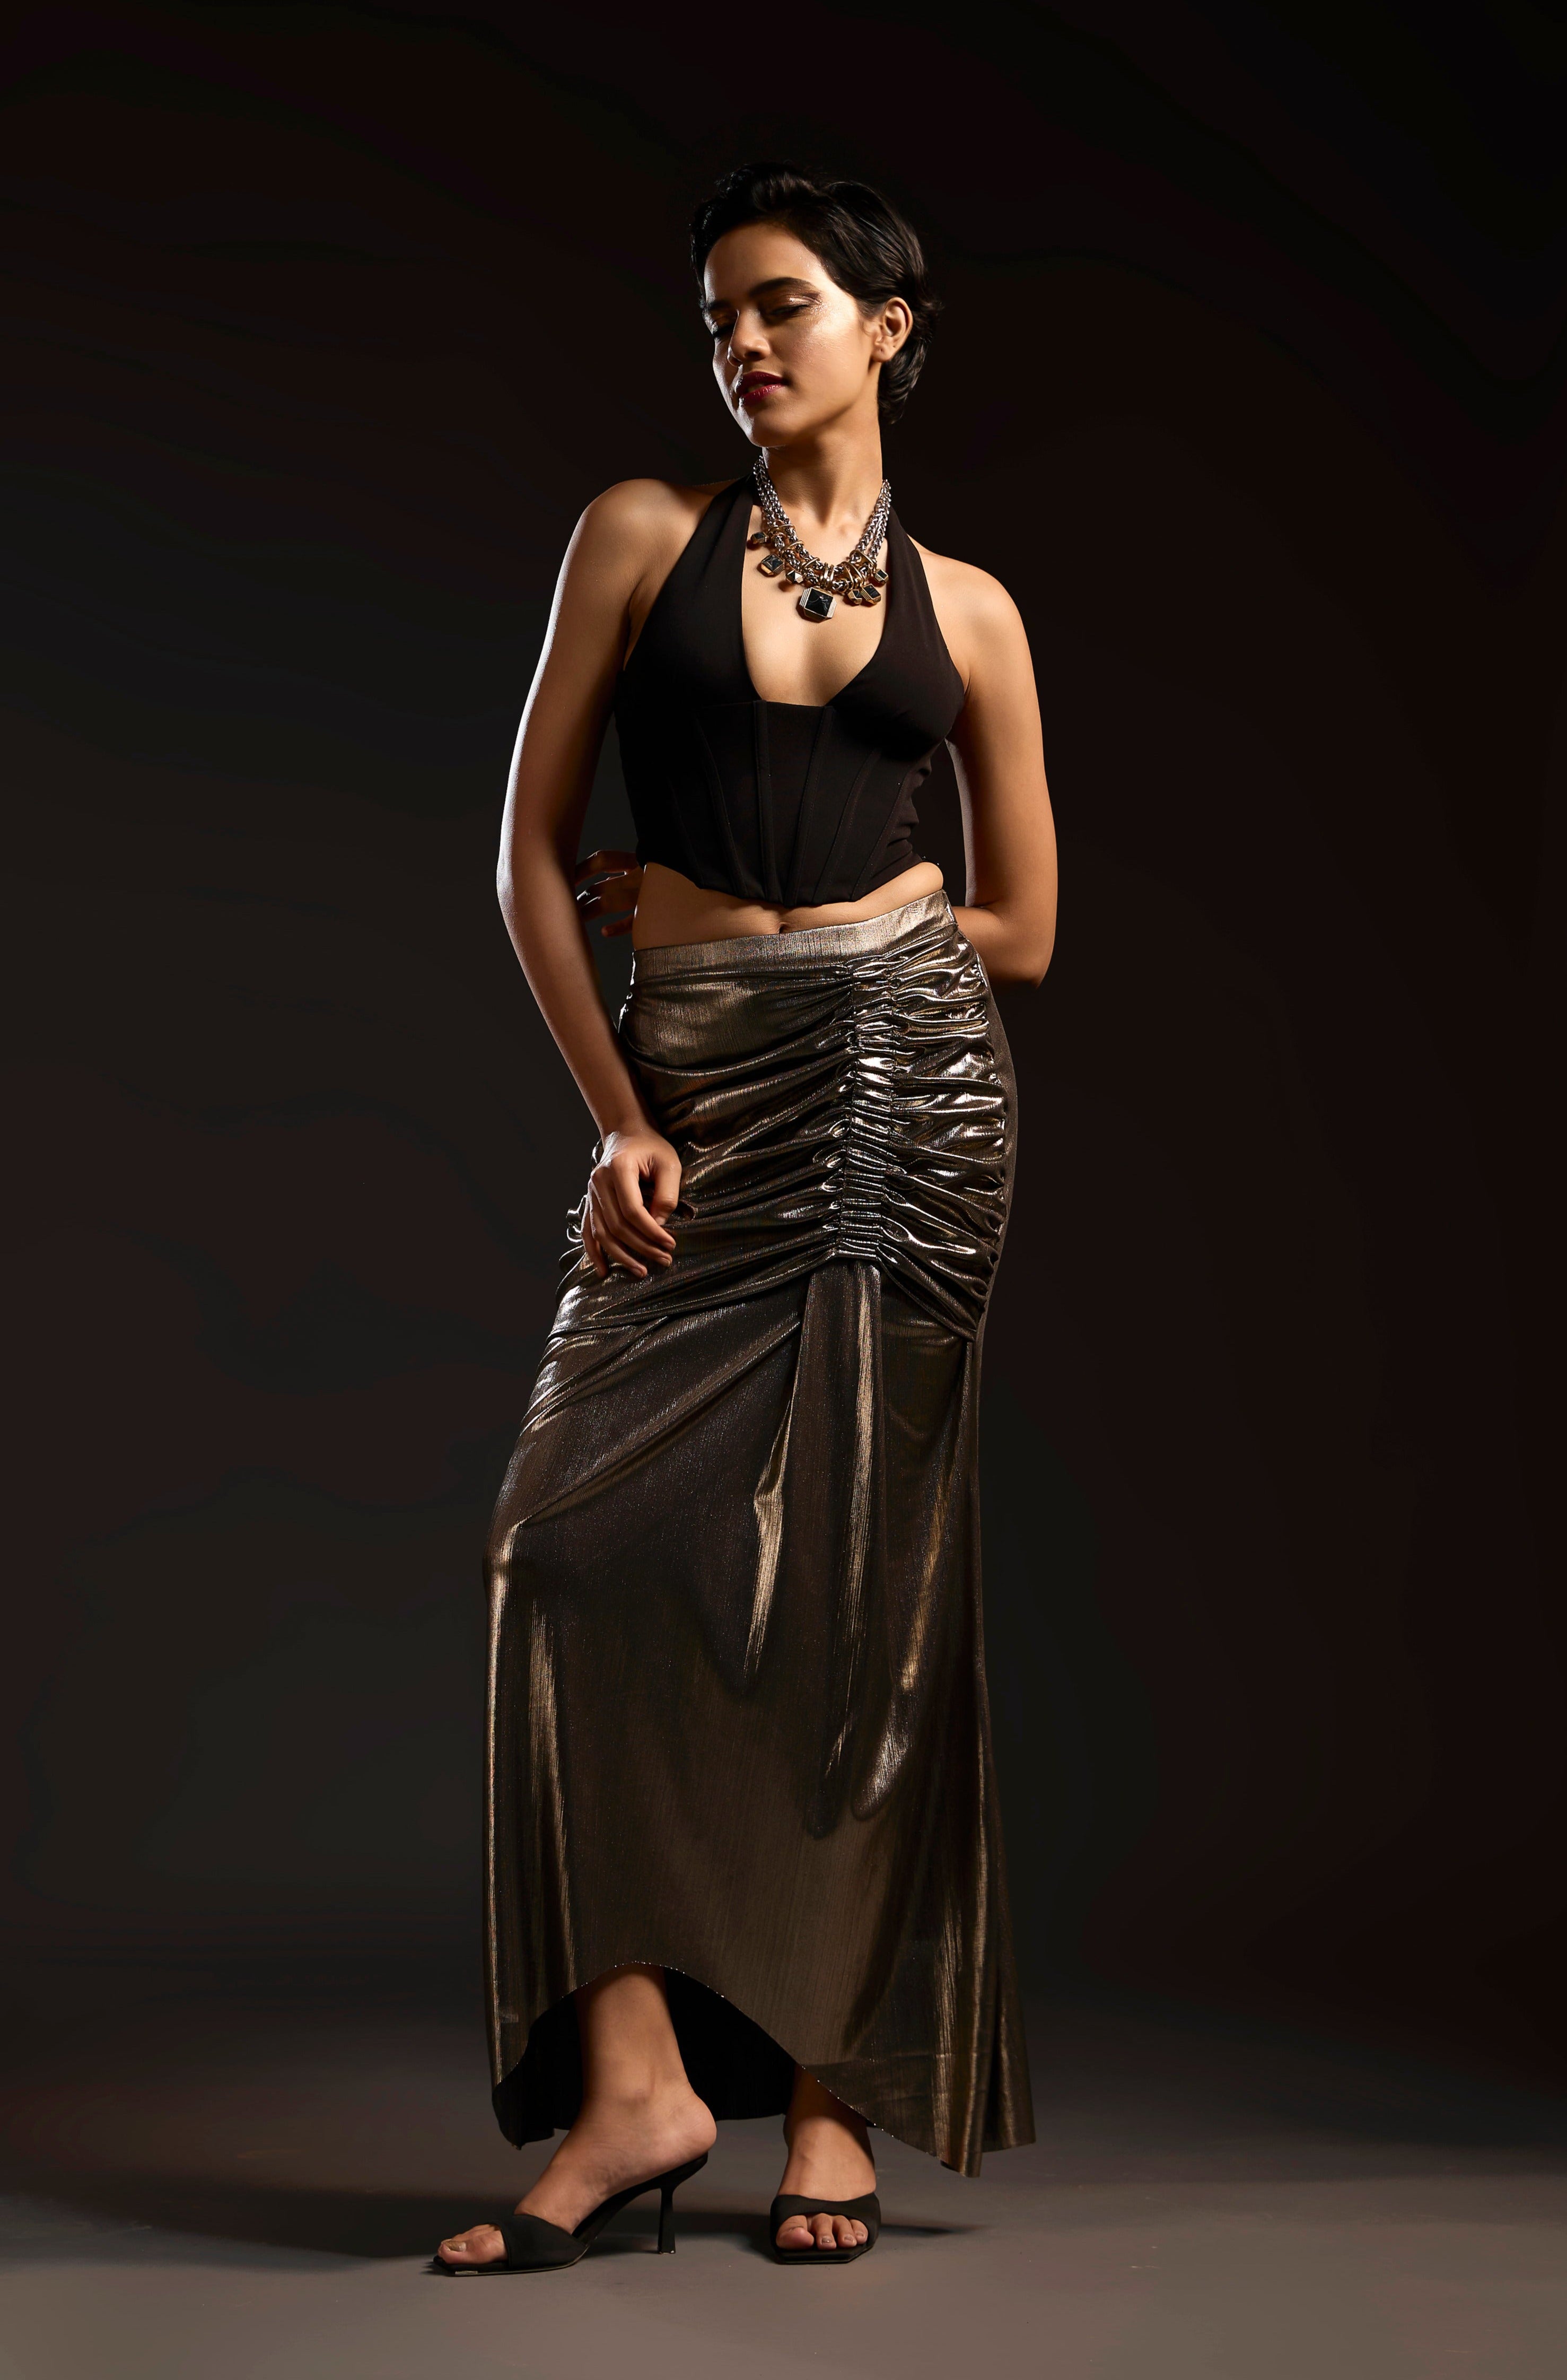 Ophelia Skirt - Dark silver